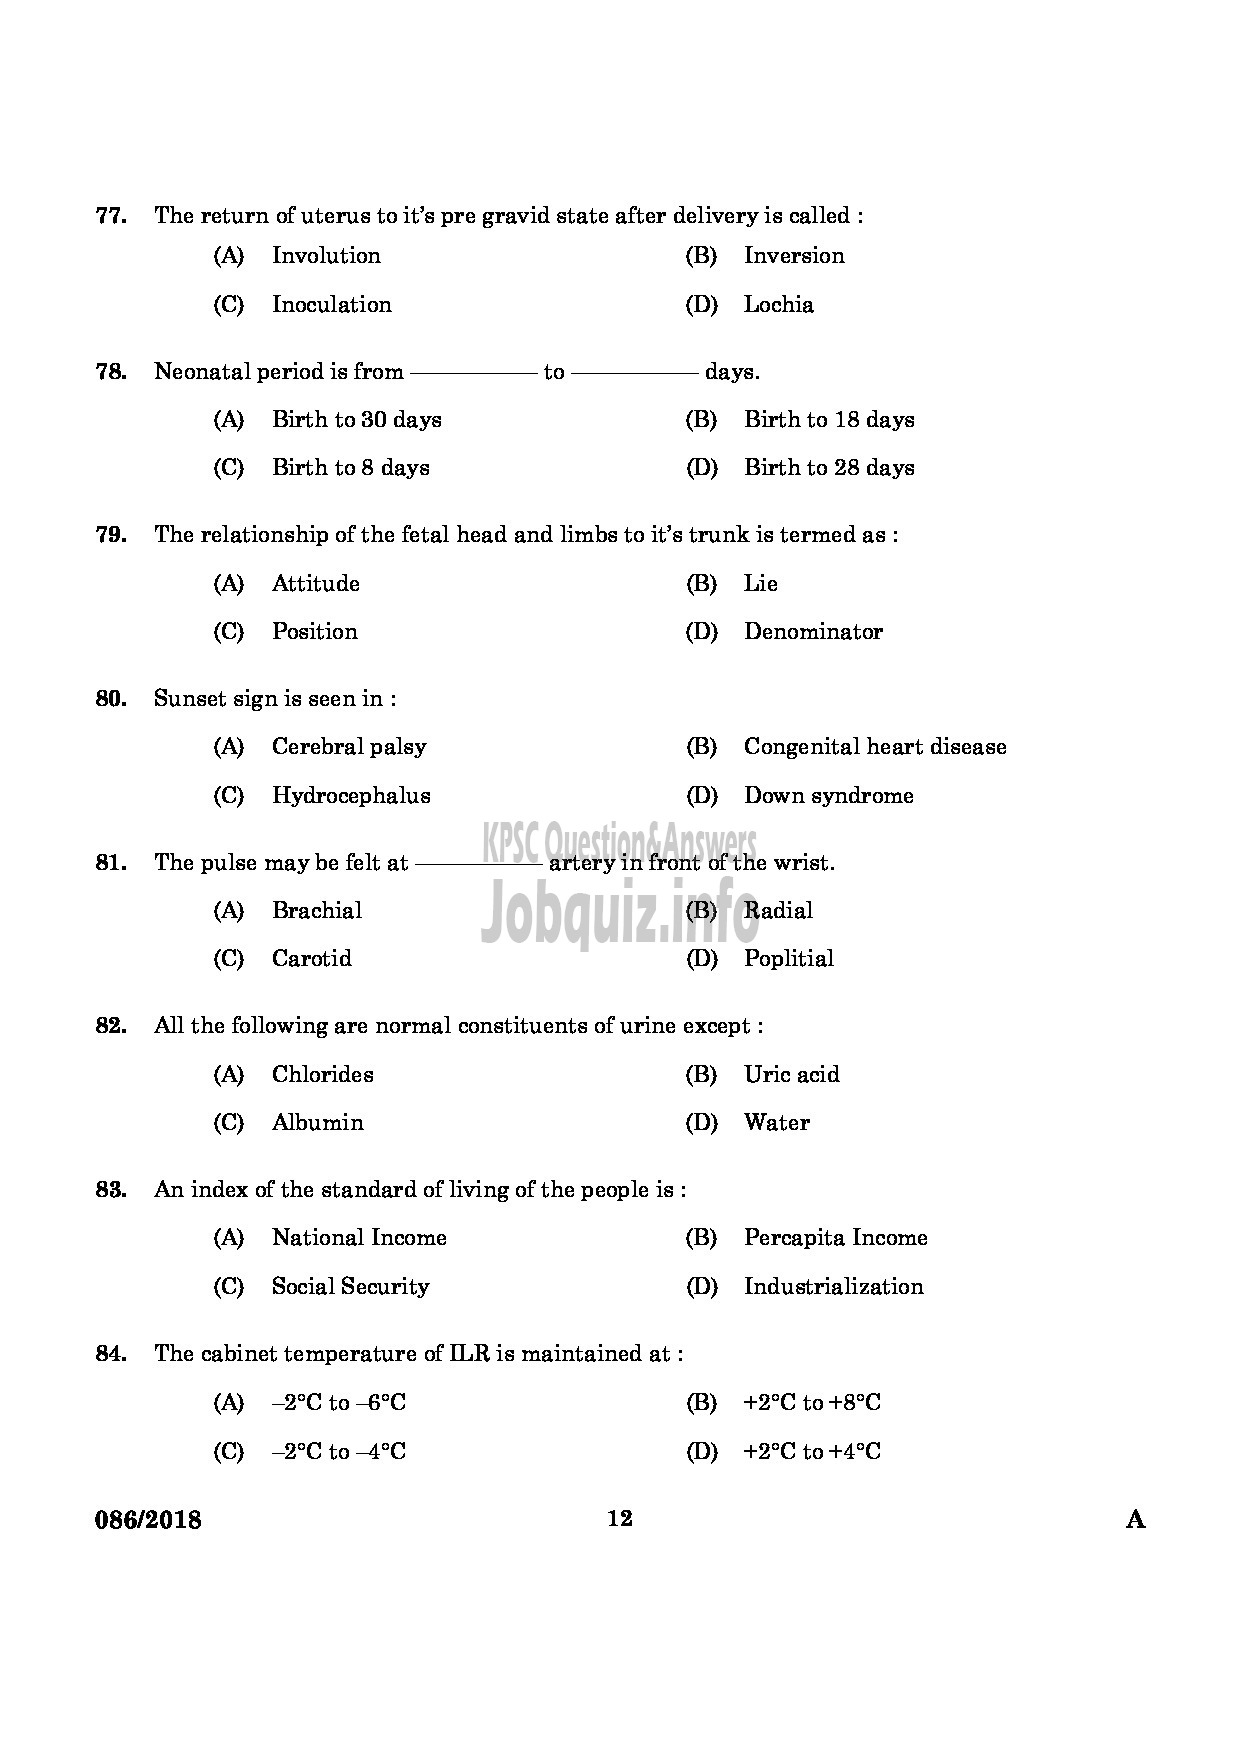 Kerala PSC Question Paper - JUNIOR PUBLIC HEALTH NURSE GR II HEALTH SERVICES / MUNICIPAL COMMON SERVICES ENGLISH -10